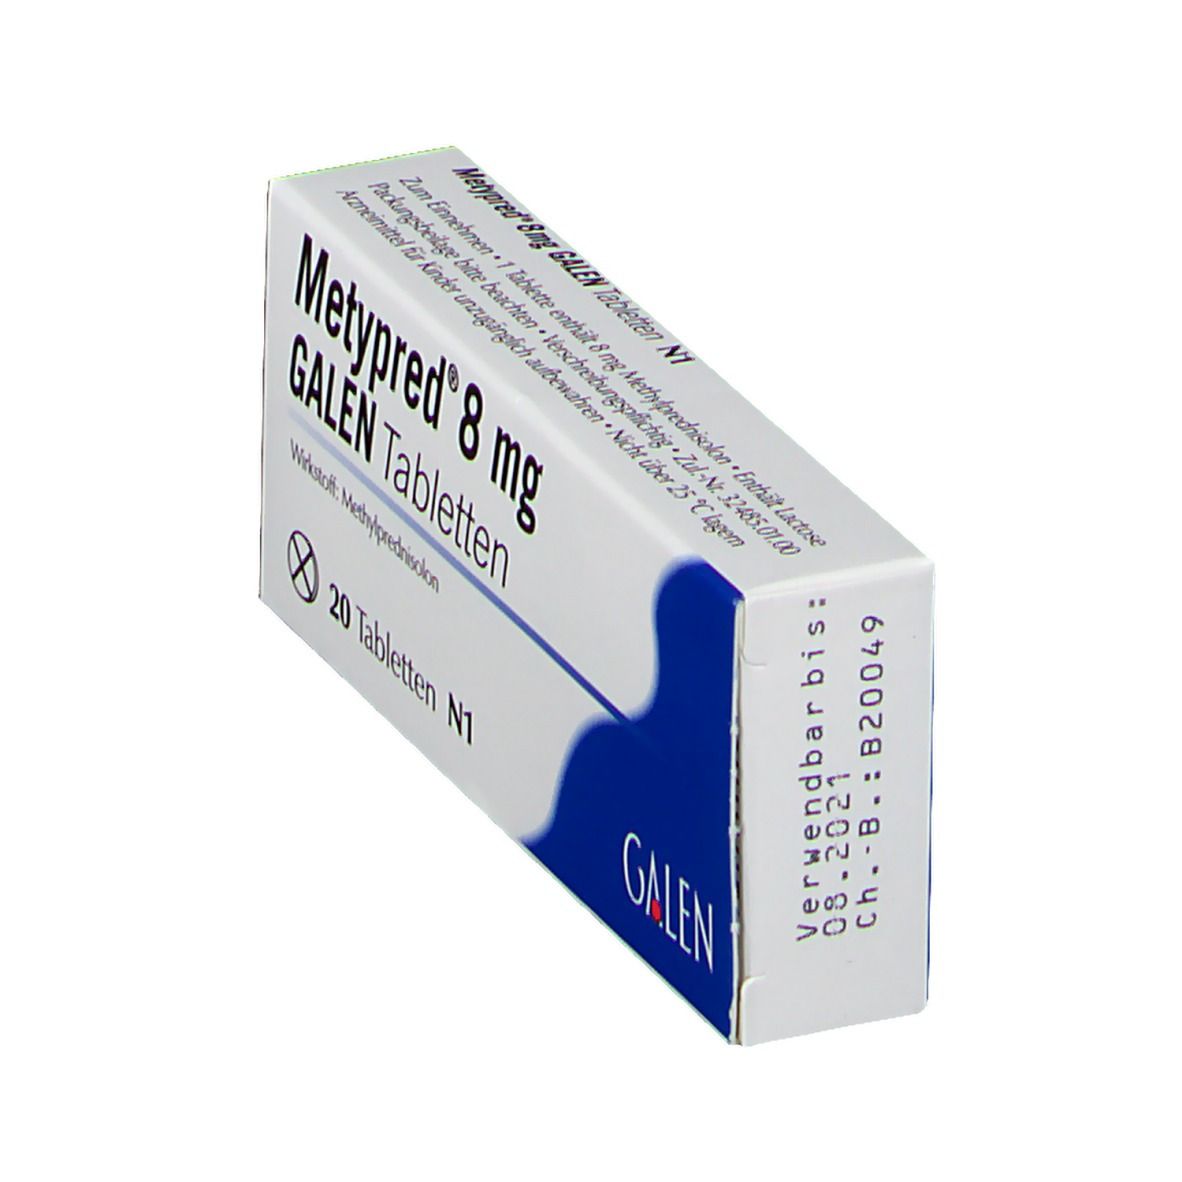 Metypred® 8 mg GALEN